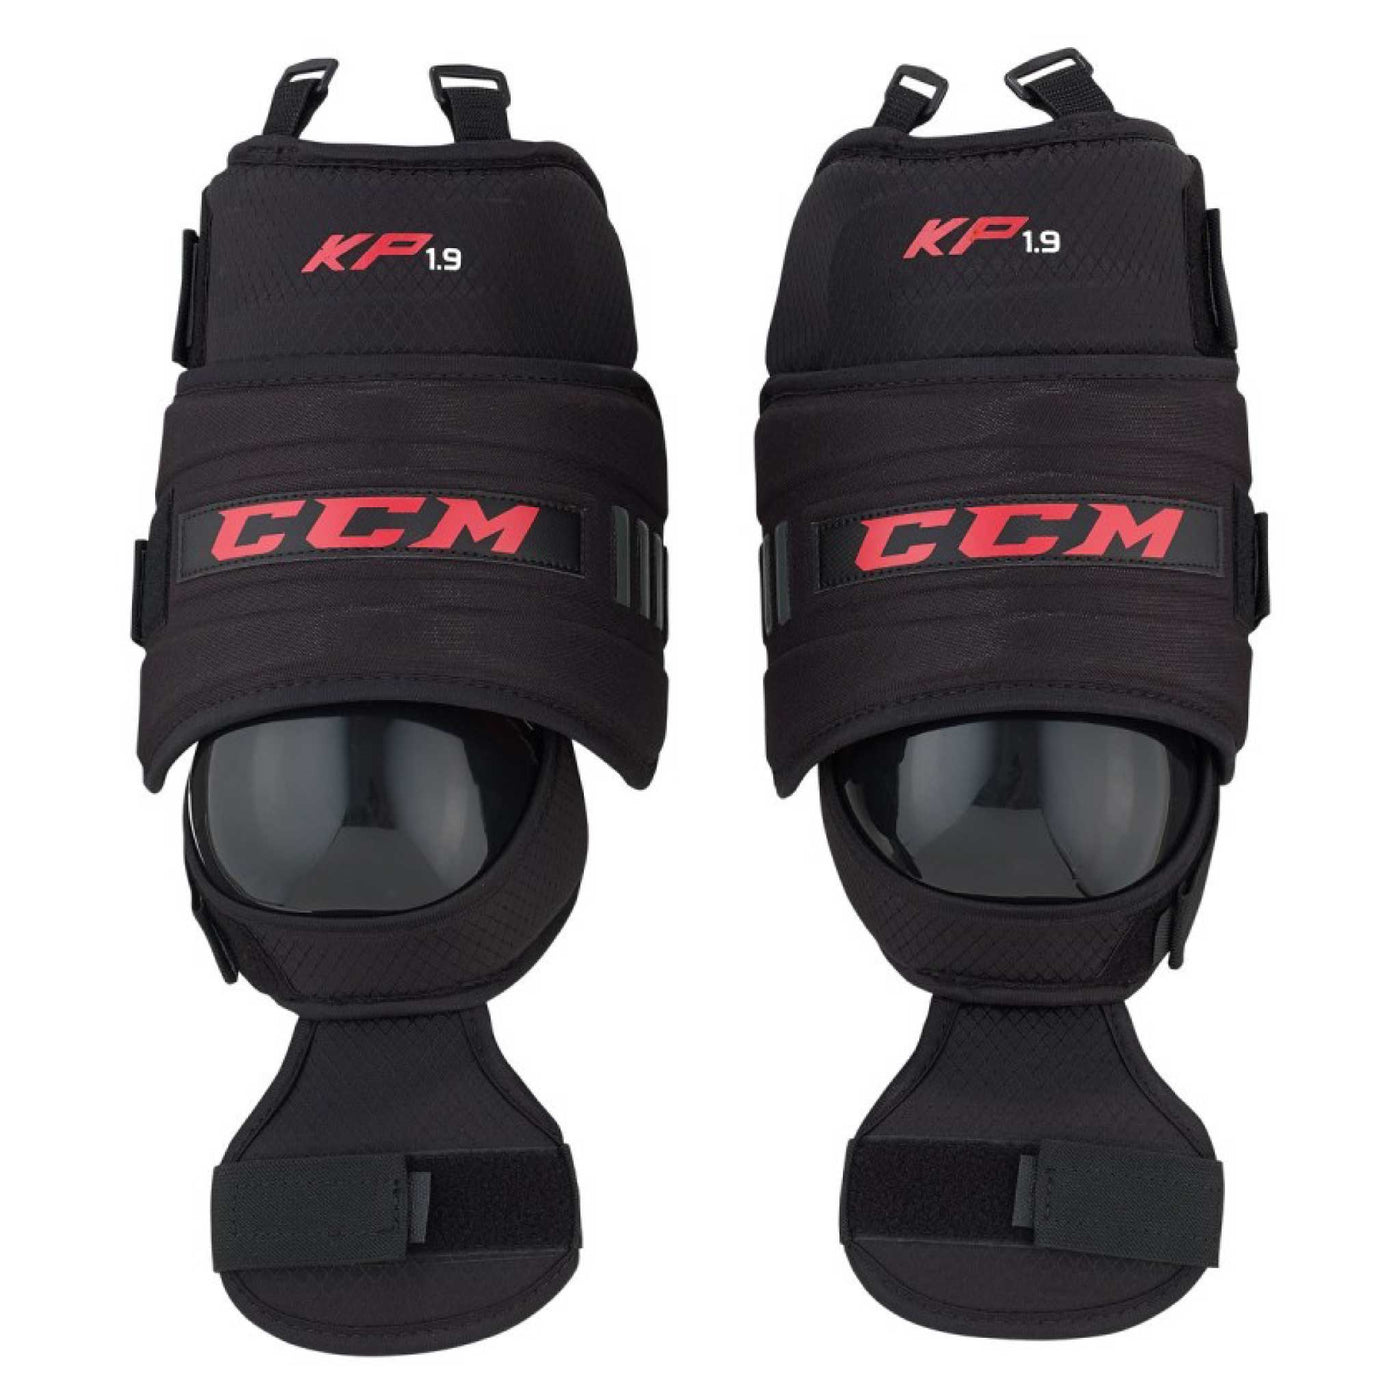 CCM 1.9 Goalie knee pads - SR